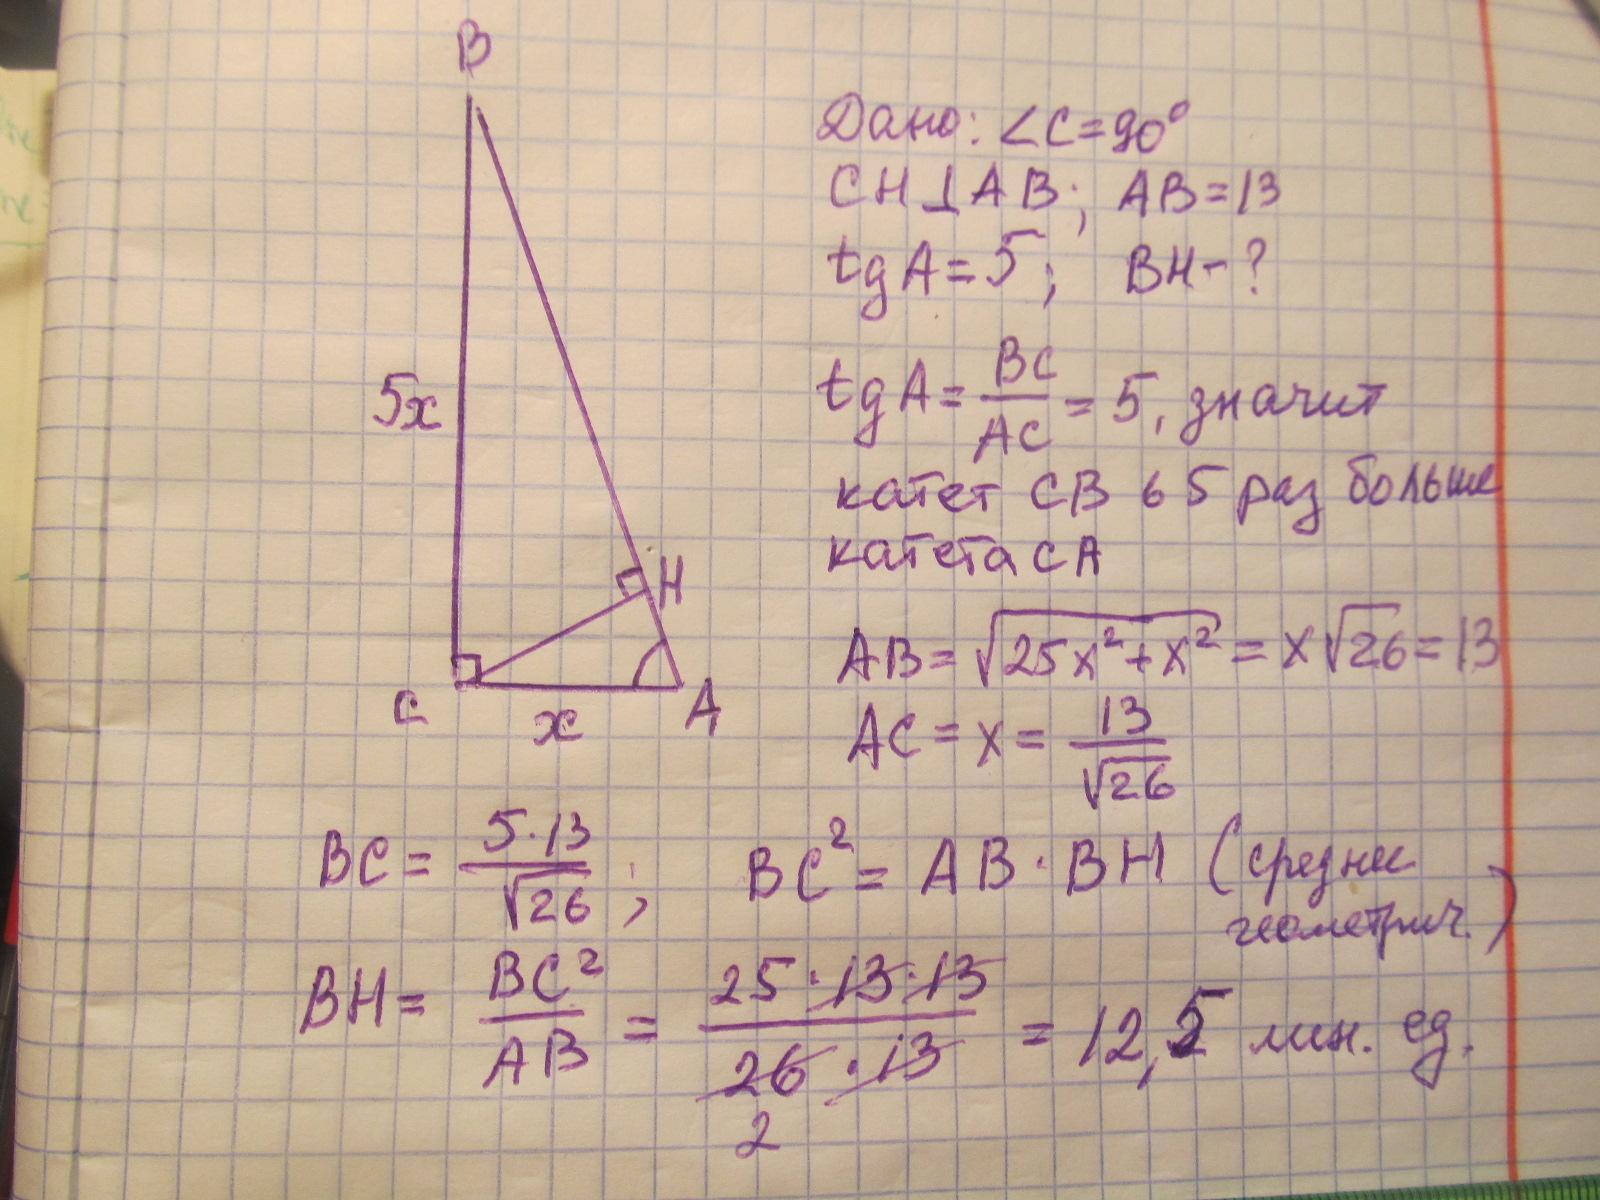 Ab 13 tg 5. Ch высота ab 13 TGA 5. В треугольнике АВС угол с равен 90 СН высота Найдите Вн. Треугольнике АВС угол с равен 90°, СН — высота, ab = 13, TG A = 5.. В треугольнике ABC угол c равен 90 ab 13 TGA 1/5 Найдите высоту Ch..